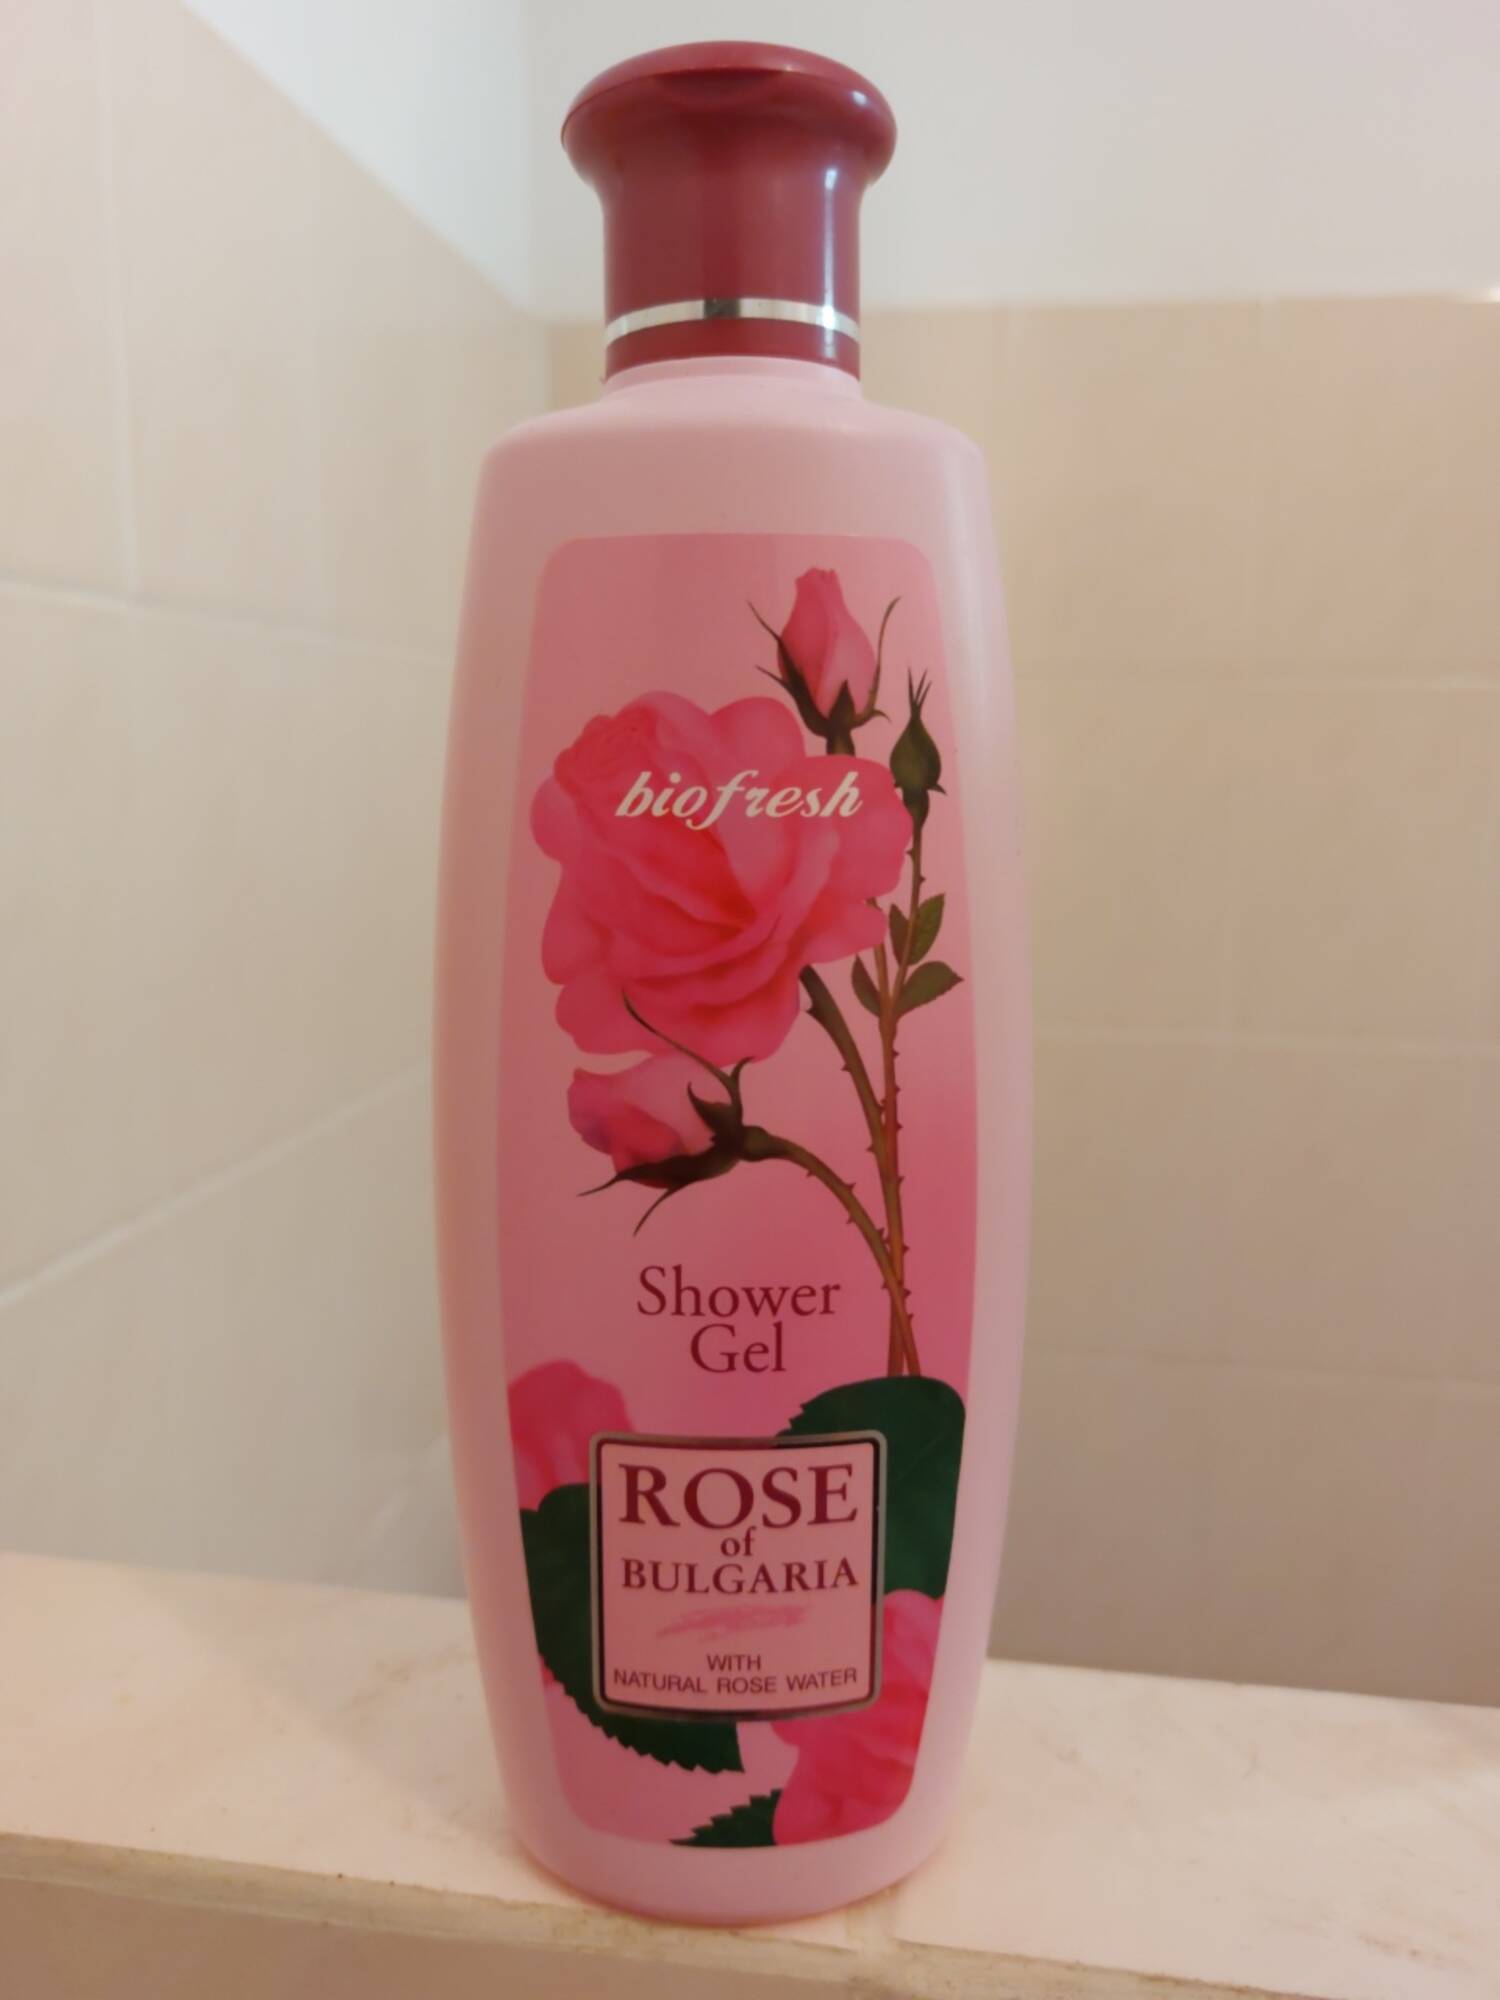 BIOFRESH - Shower gel Rose of Bulgaria